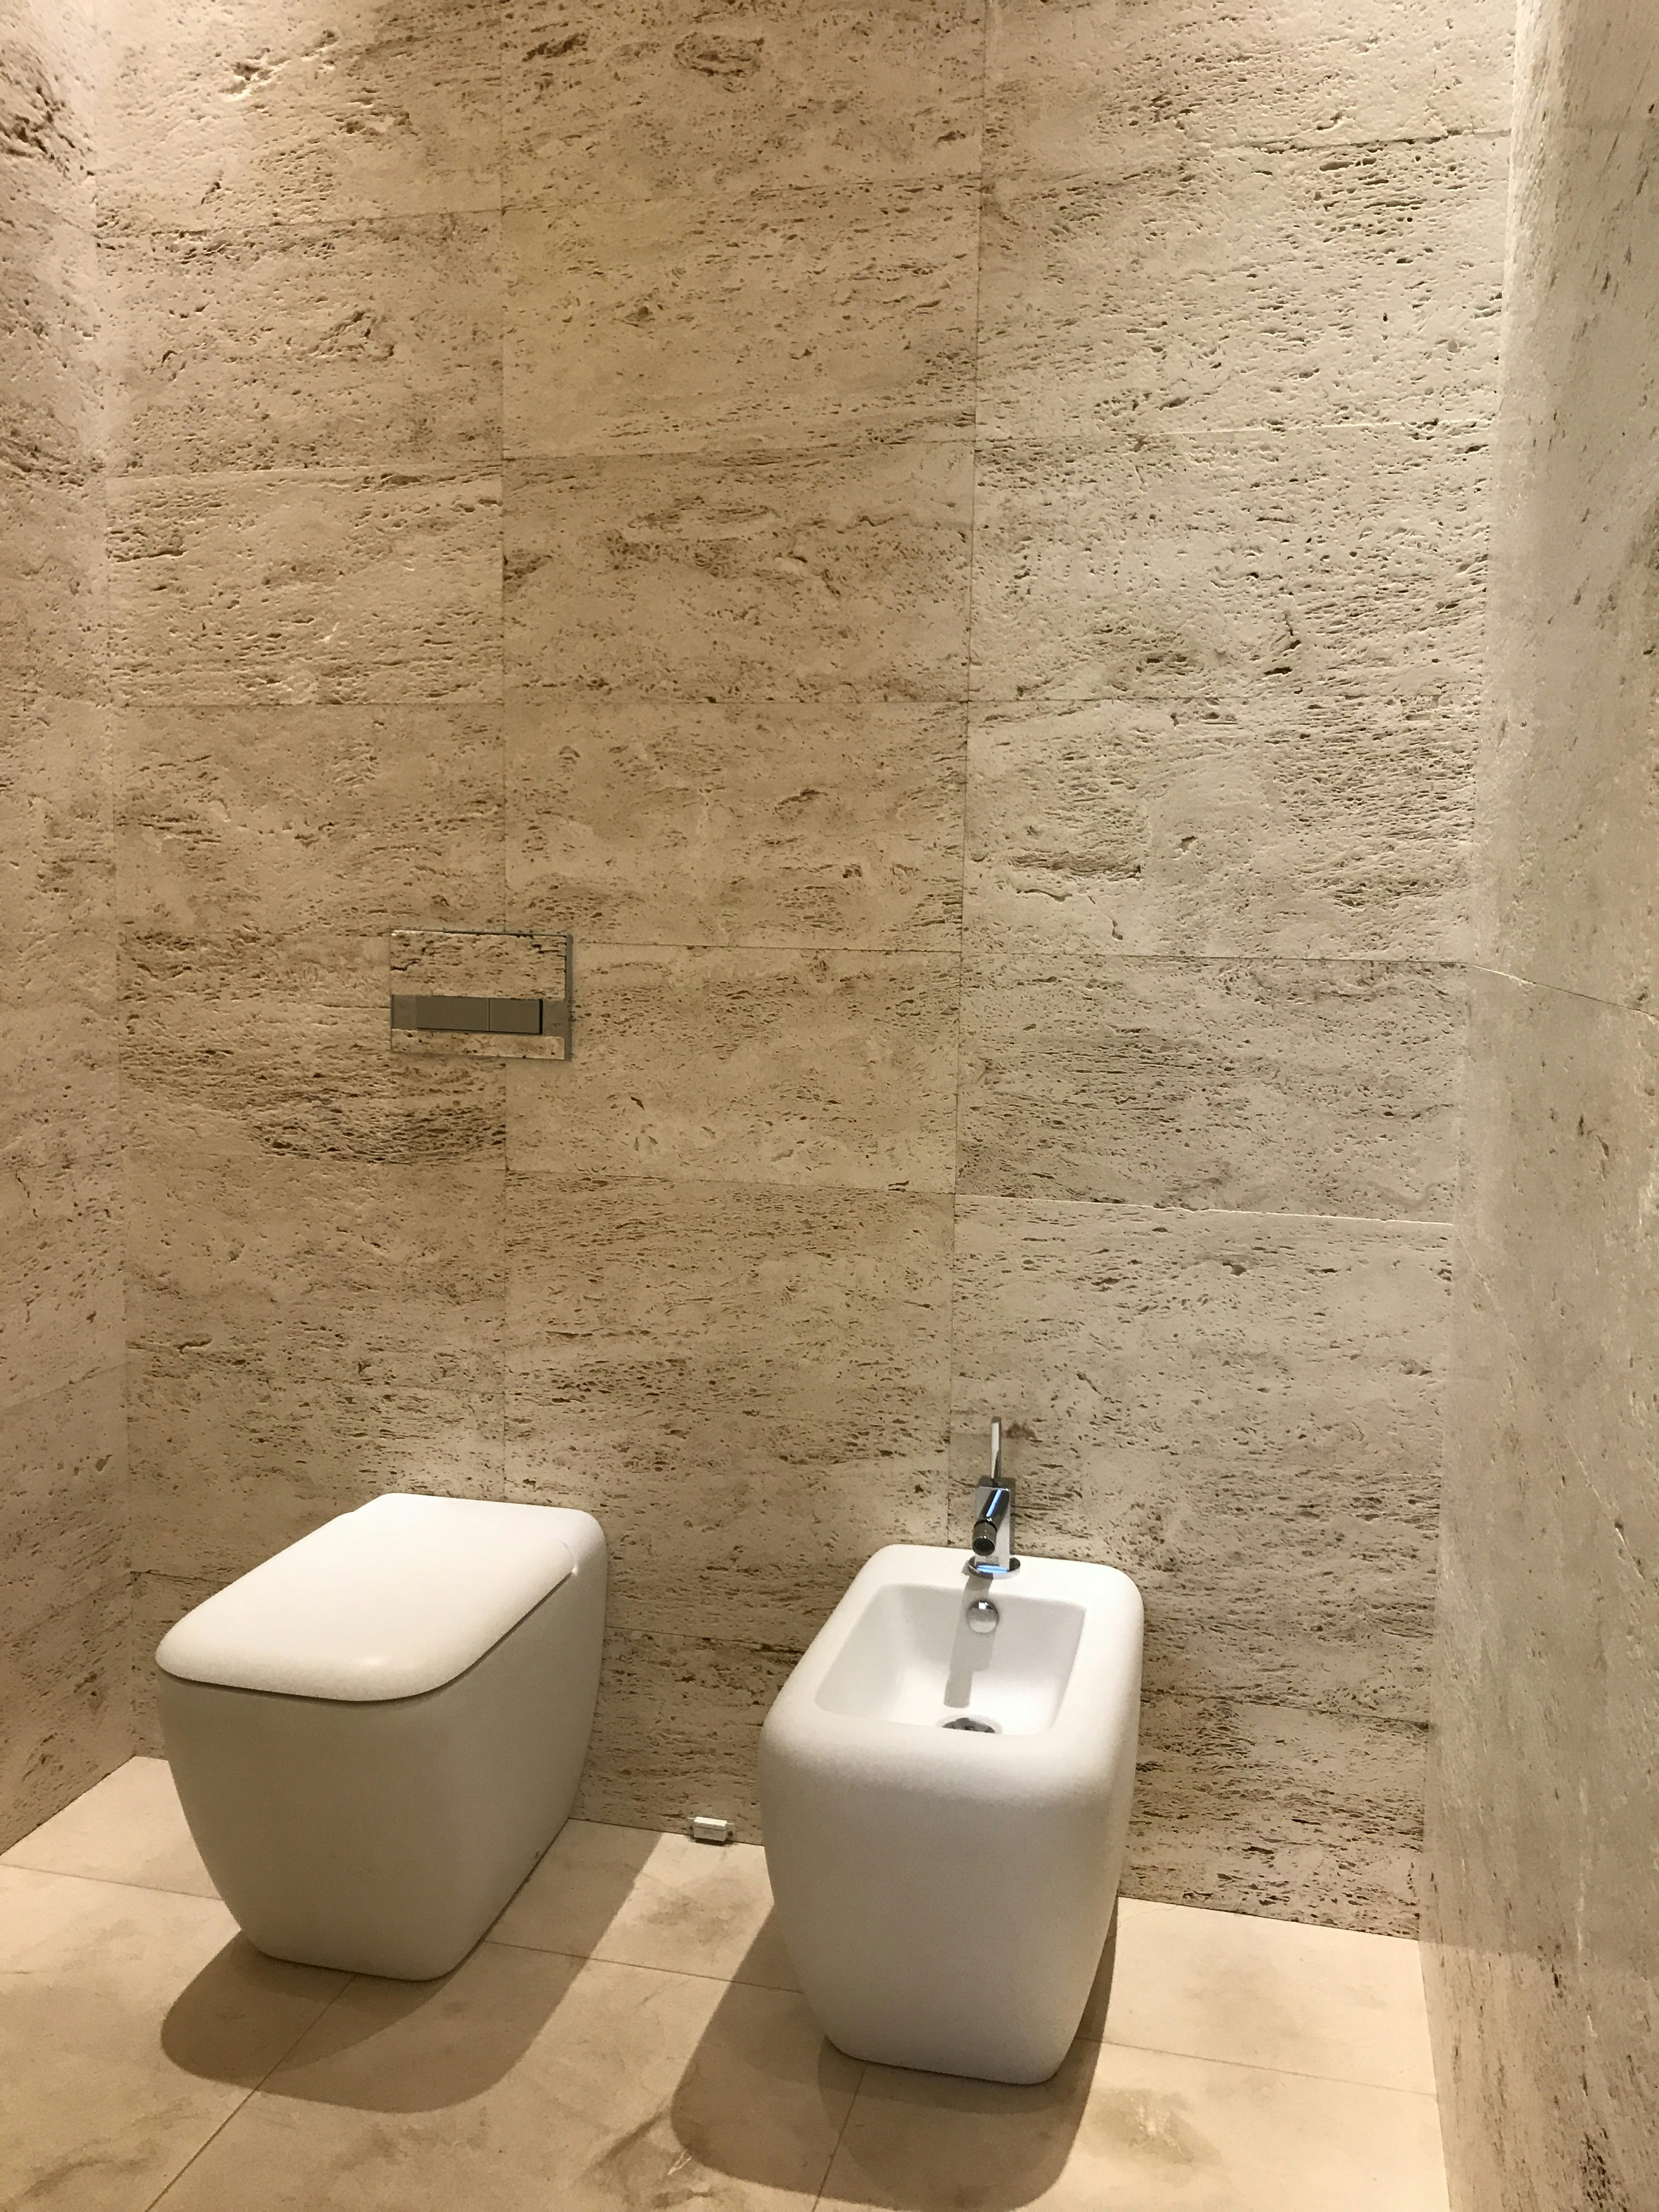 Toilet Bidet Combo in Modern Bathroom